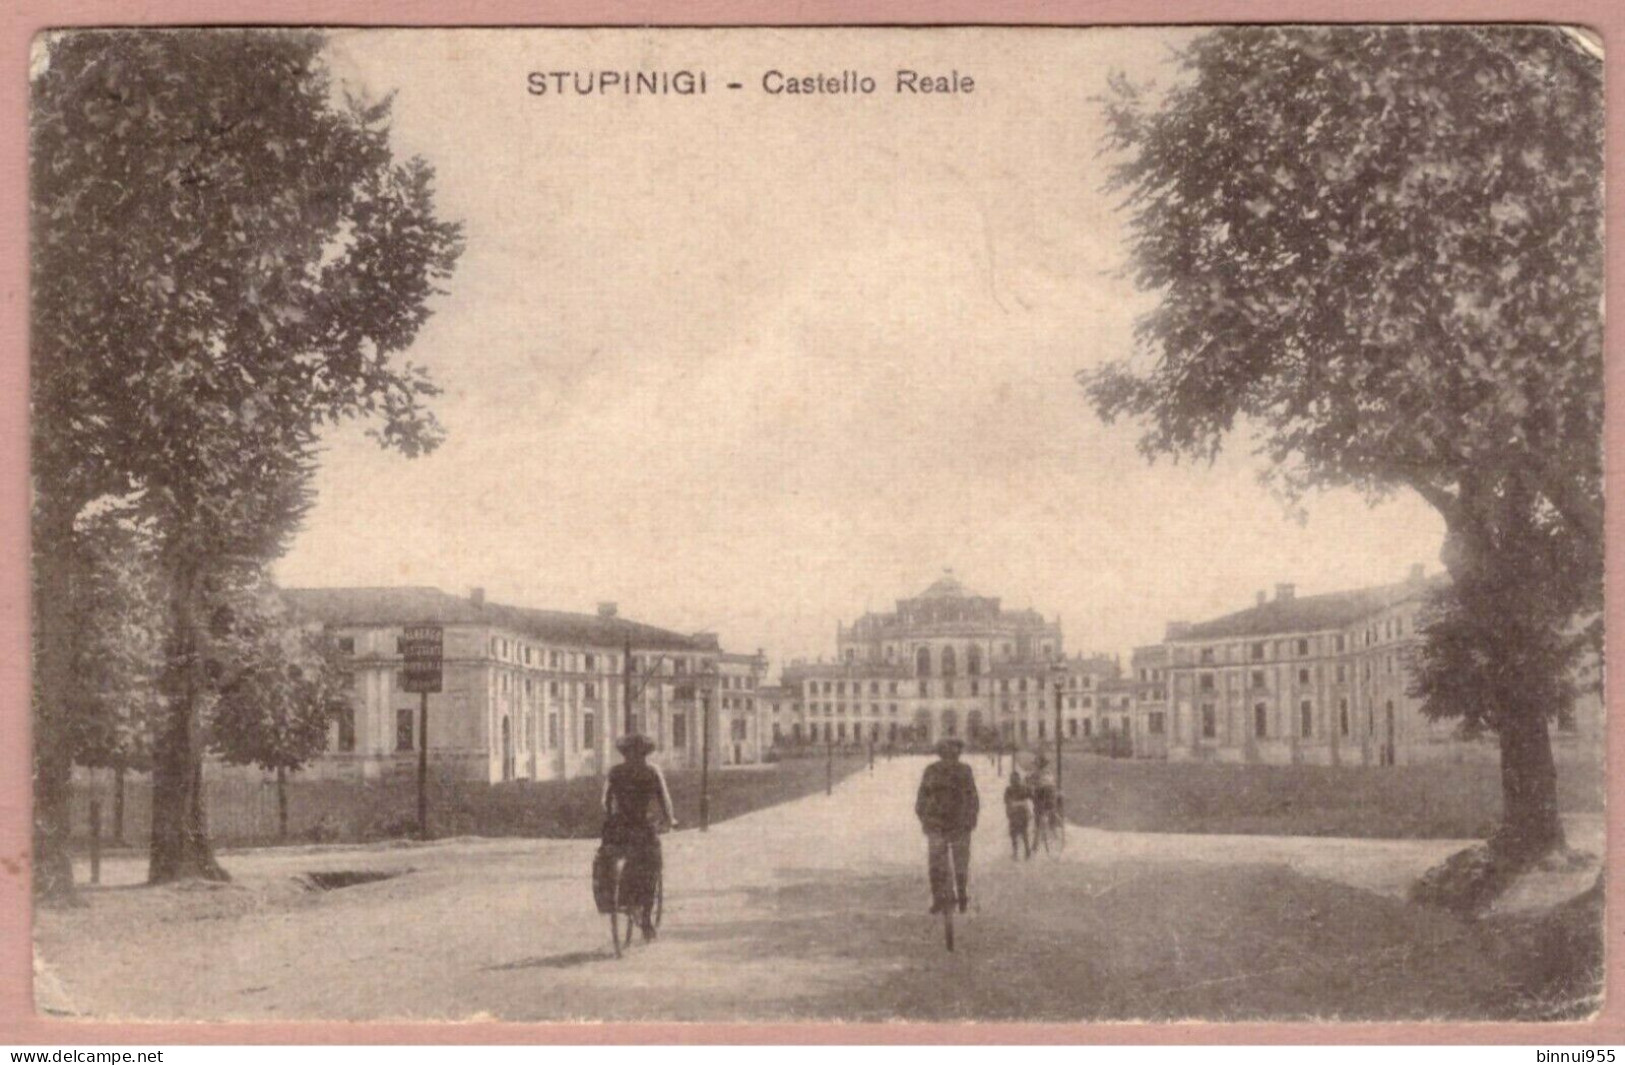 Cartolina Stupinigi Castello Reale - Viaggiata 1917 - Multi-vues, Vues Panoramiques